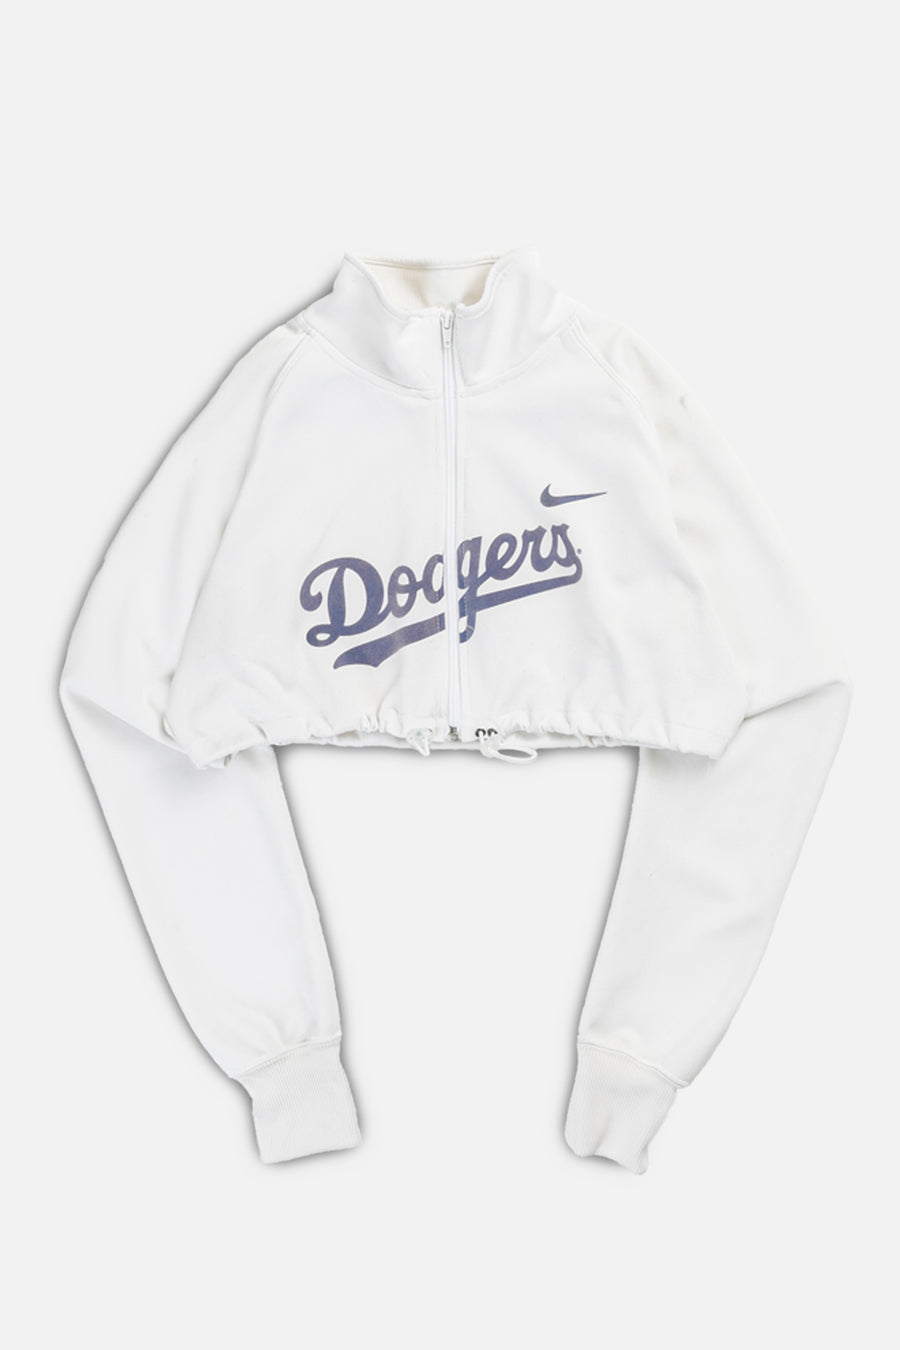 Rework Nike LA Dodgers Micro Crop Sweatshirt - M